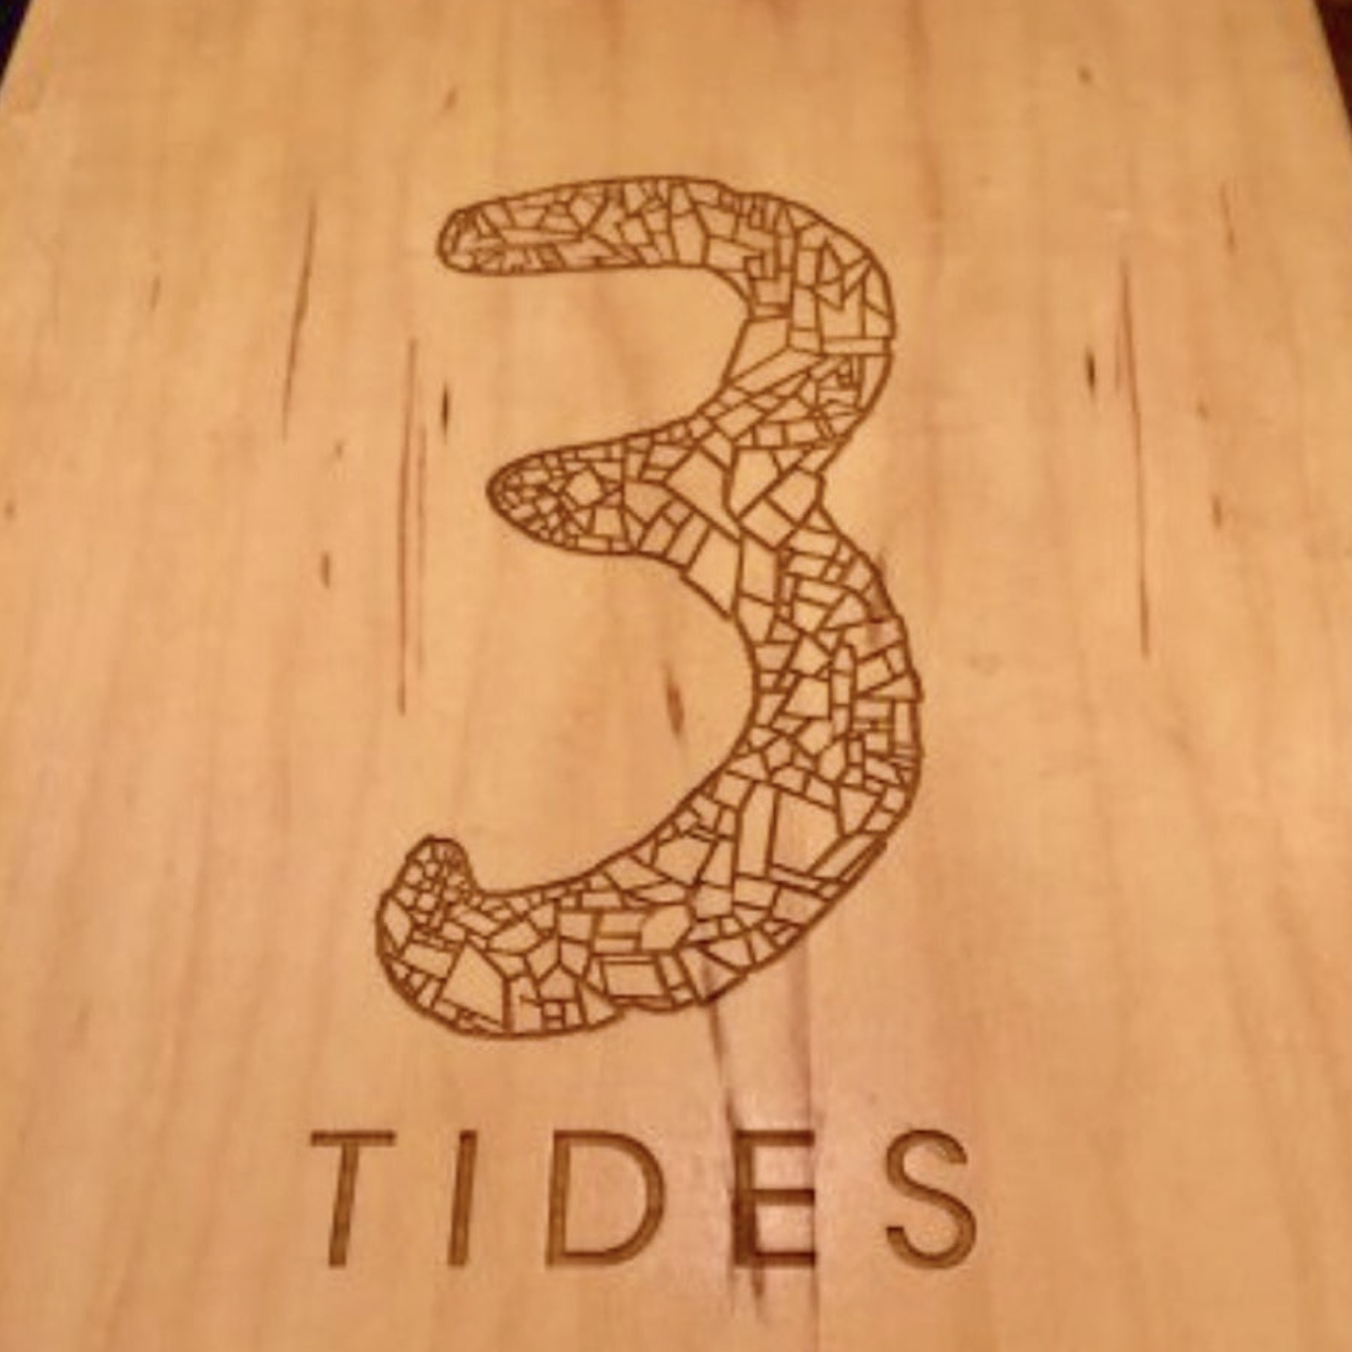 Tertiary_tides